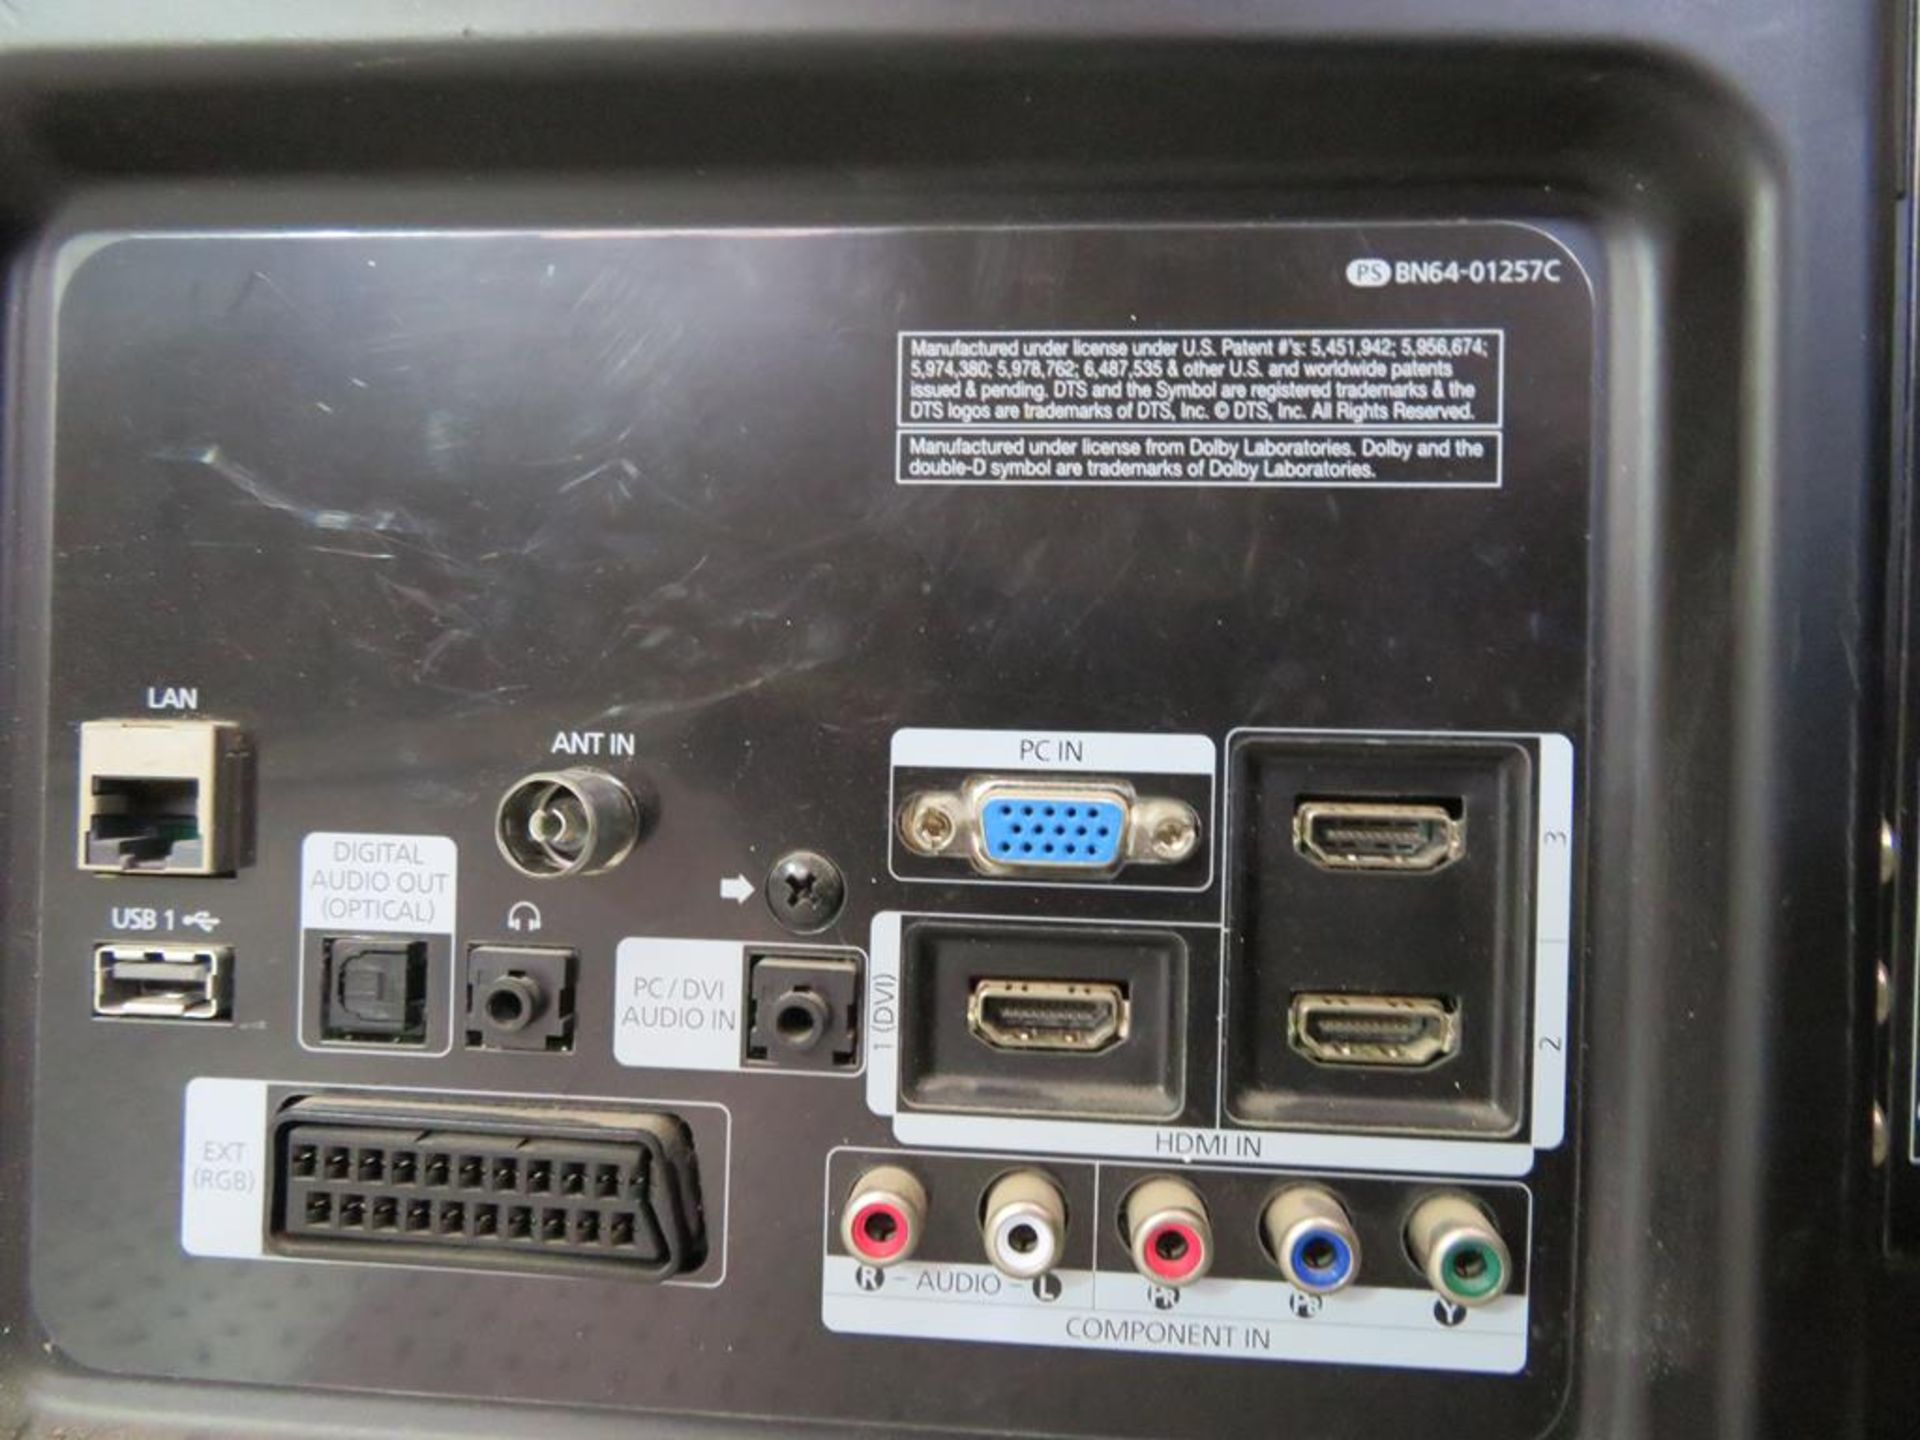 Samsung PS50C550G1WXXU 50" Plasma TV in box - Image 8 of 11